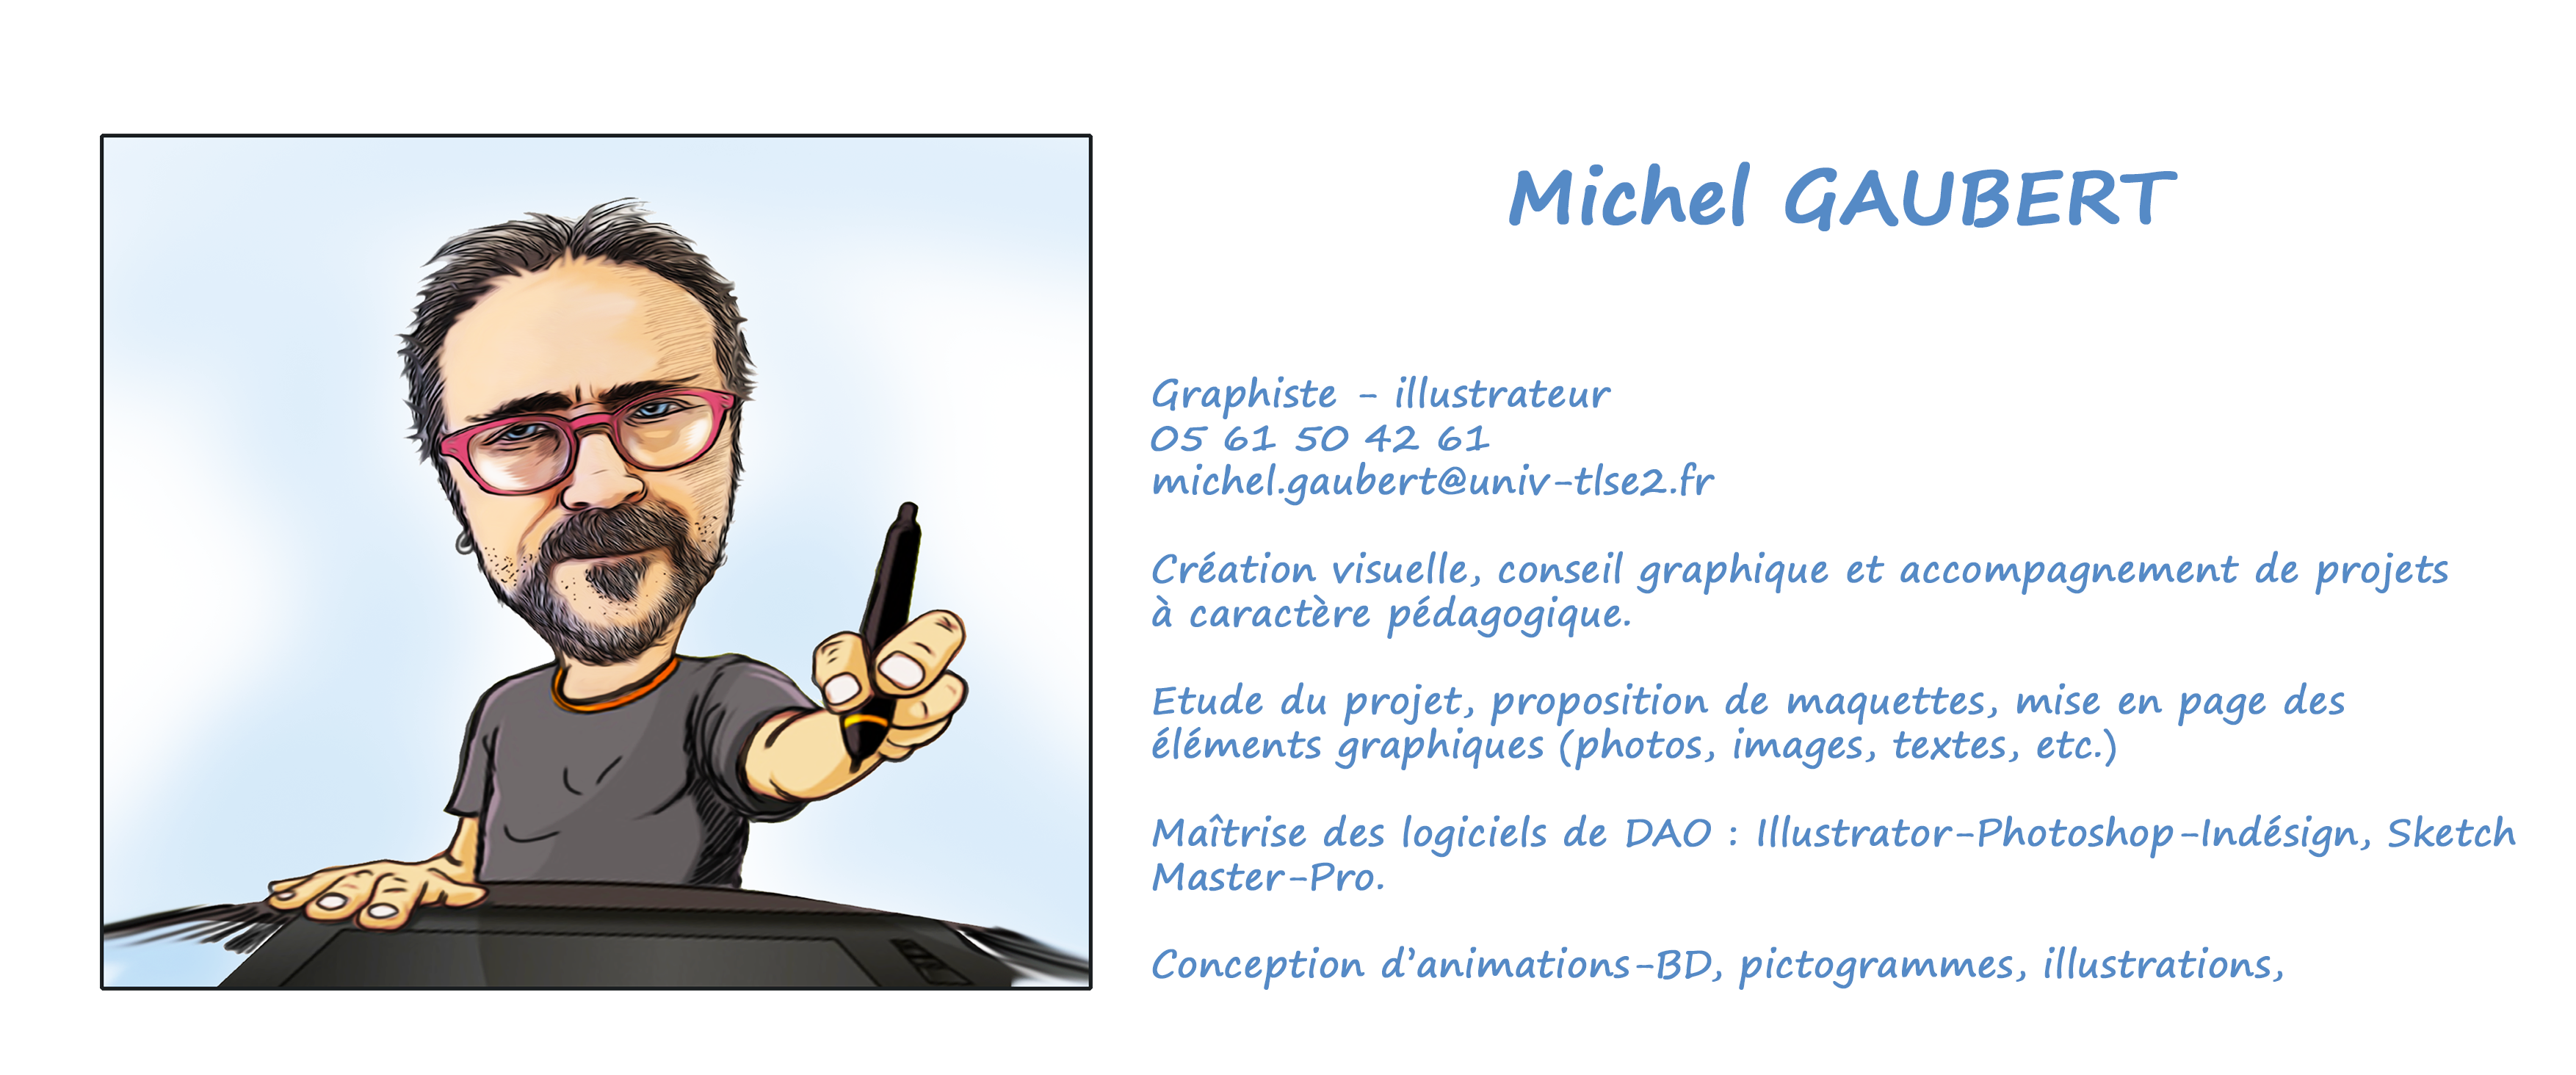 Trombinoscope : Michel Gaubert